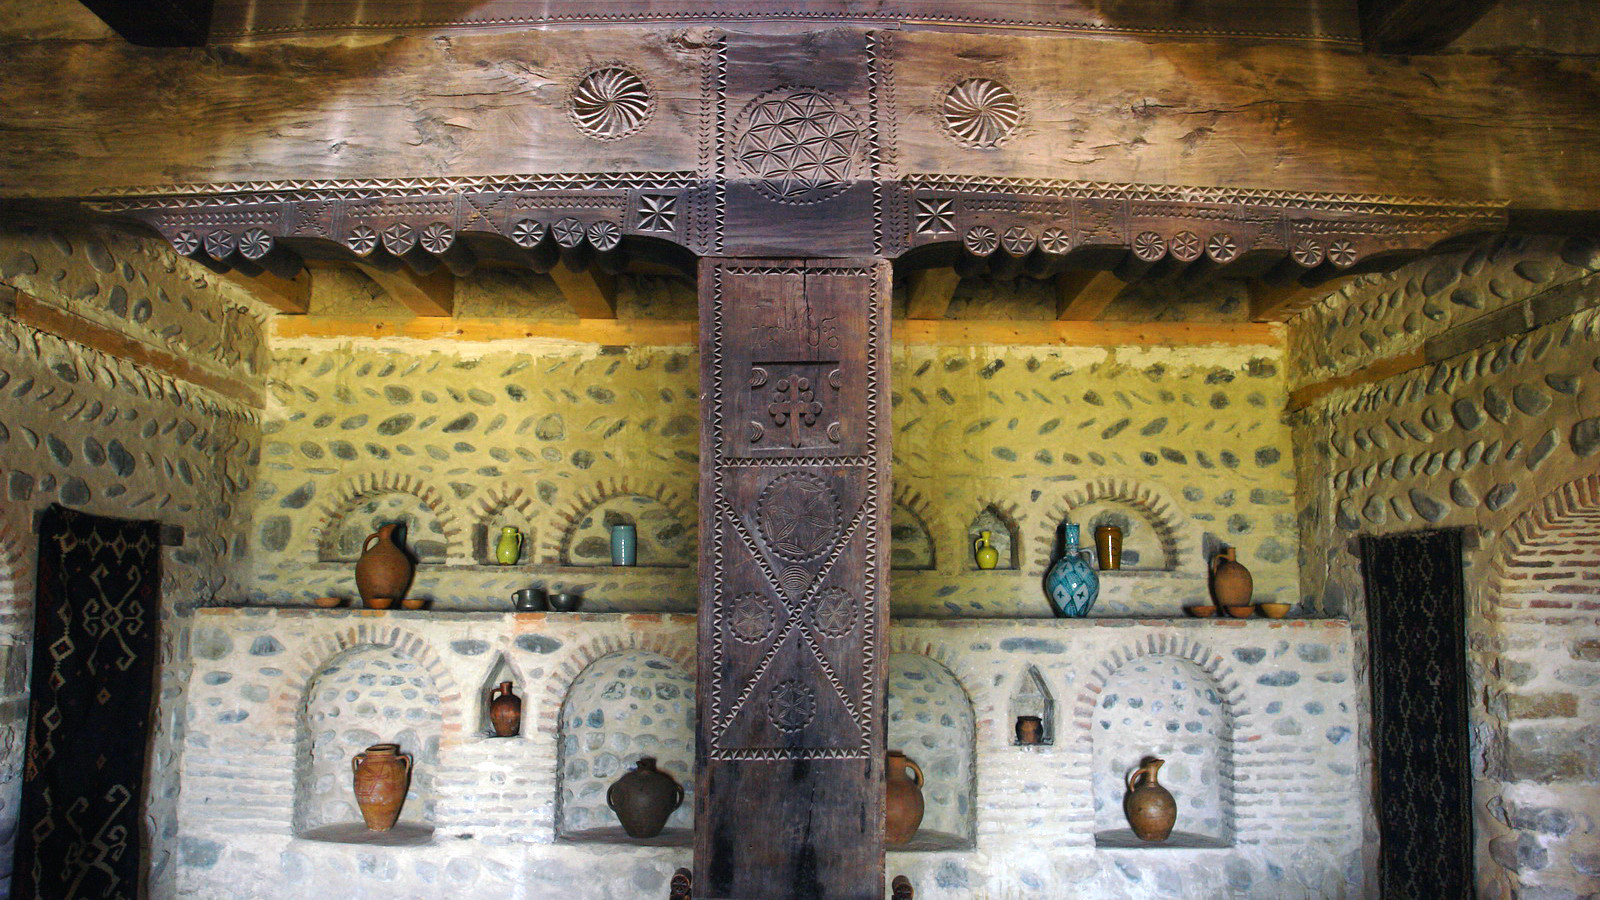 Dedabodzi, main pillar in the dwelling